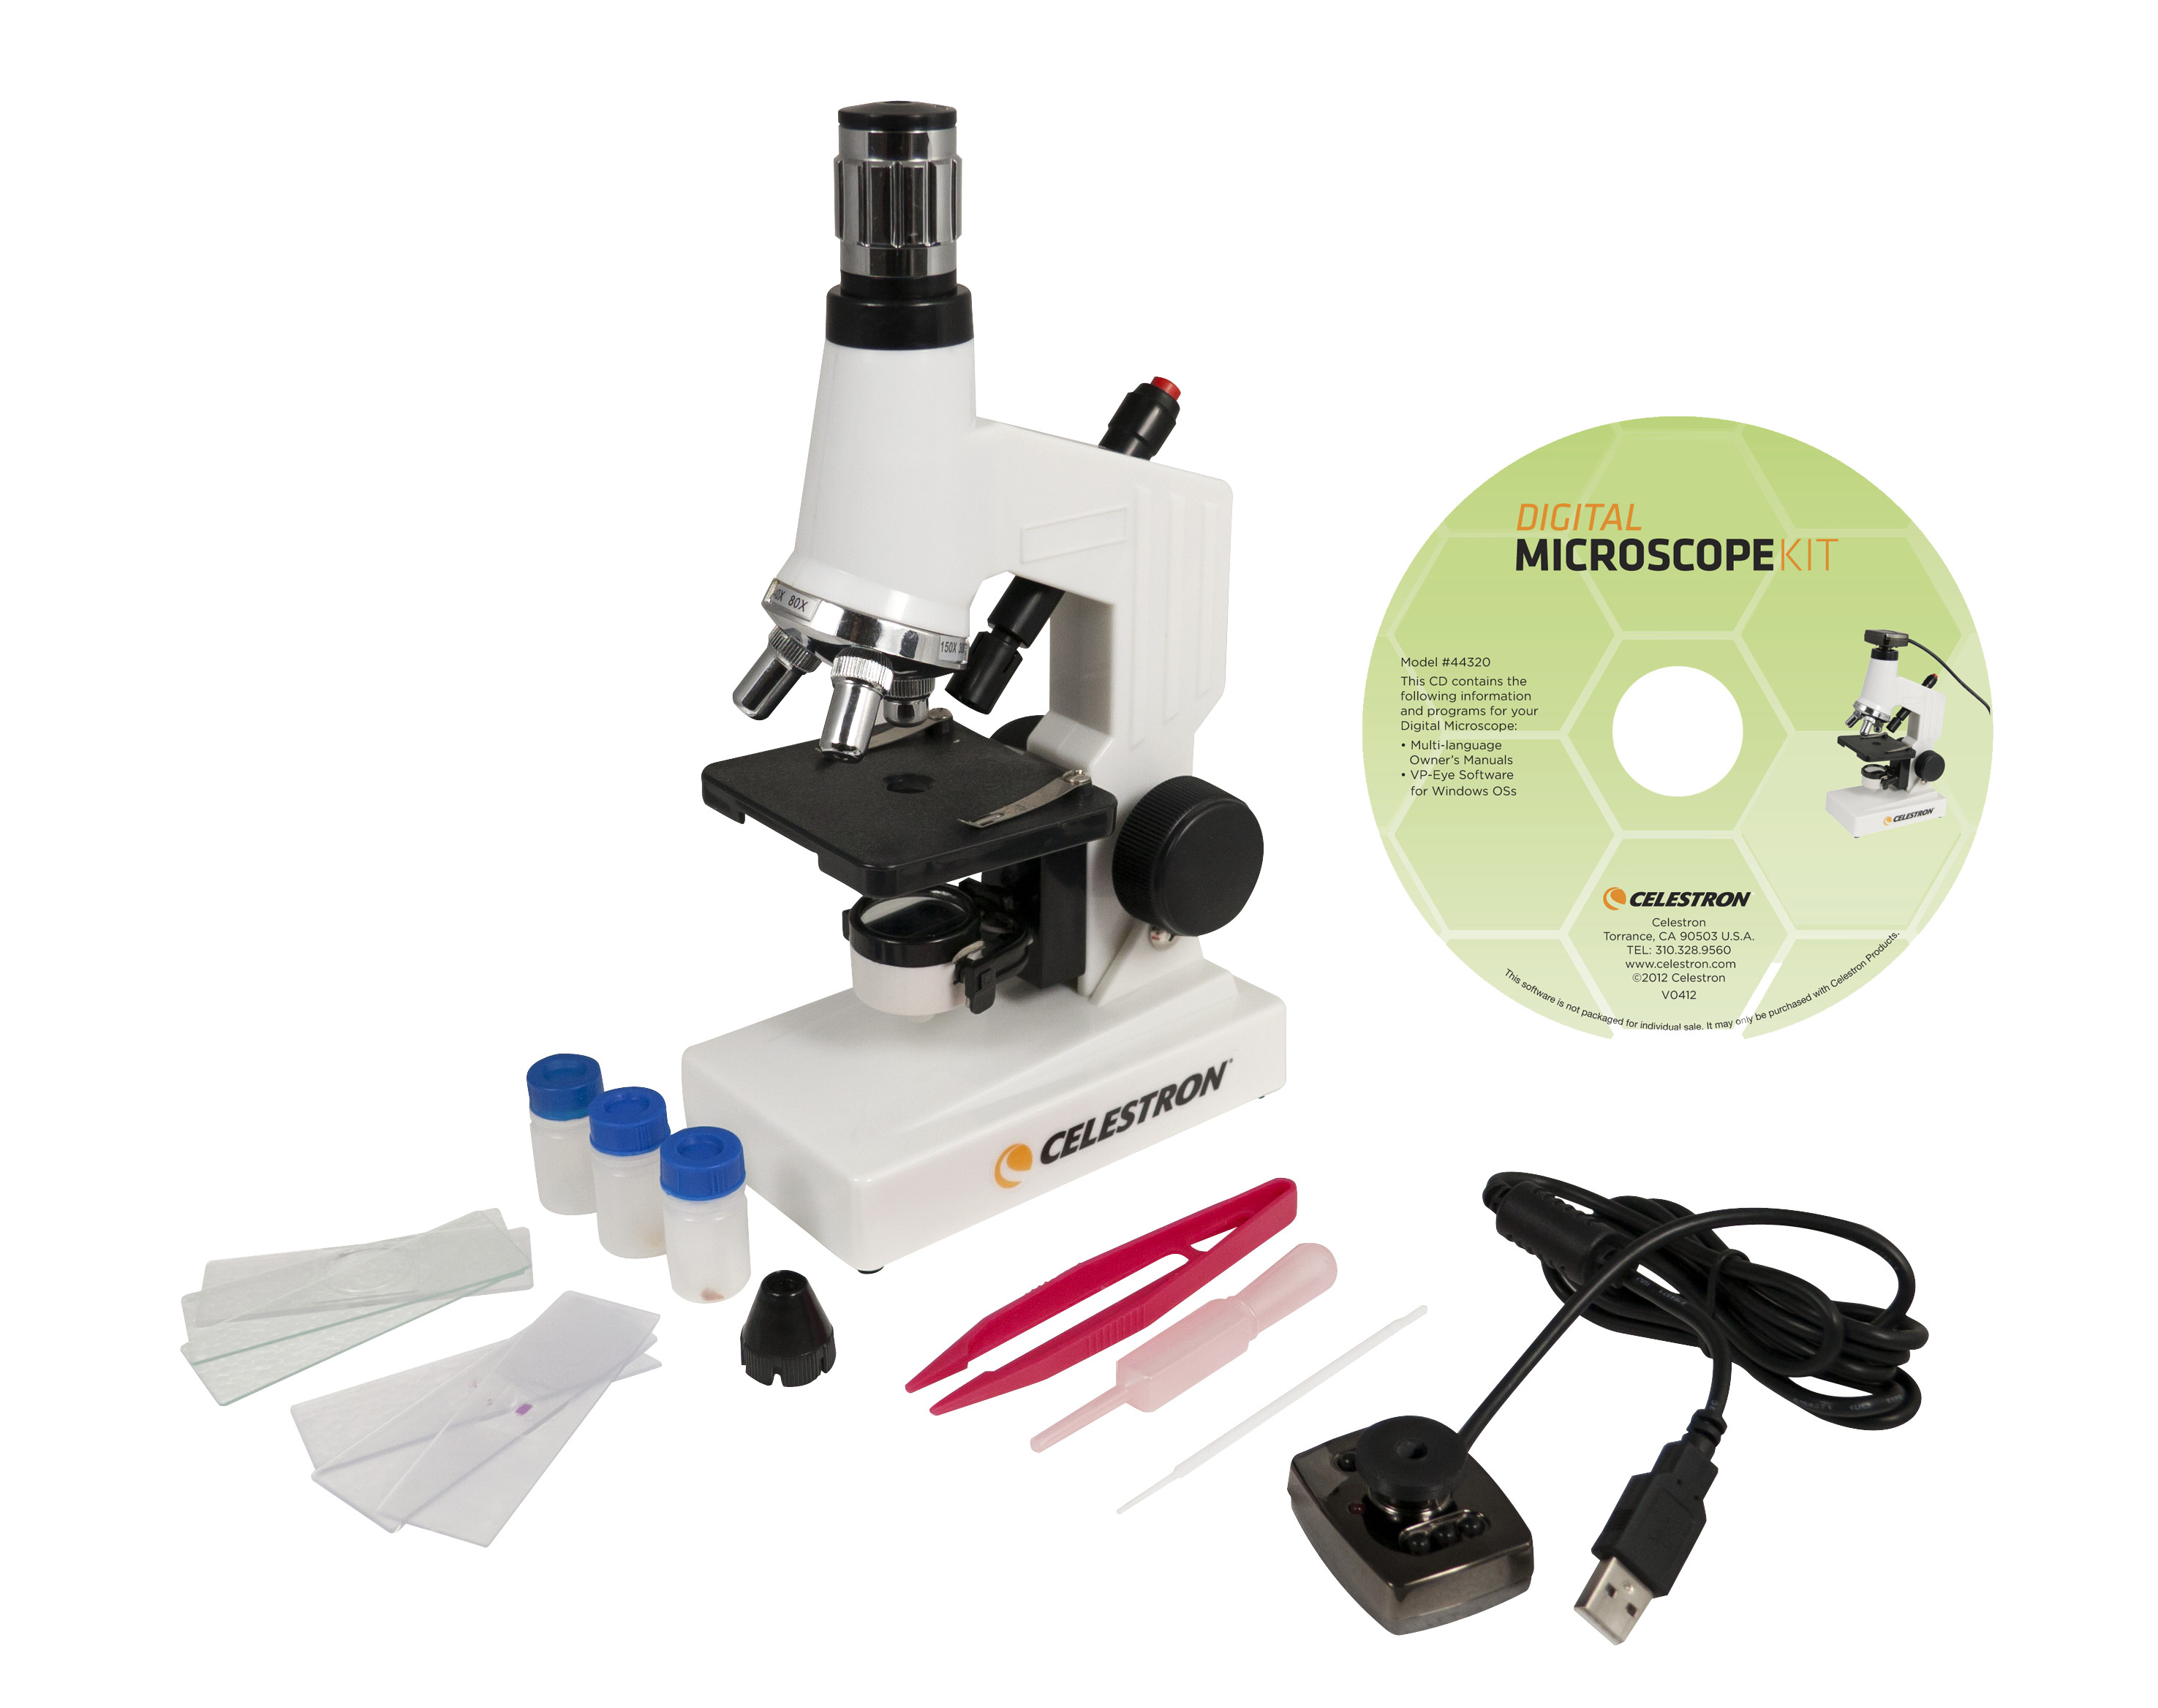 Digital_Microscope_Kit_Celestron